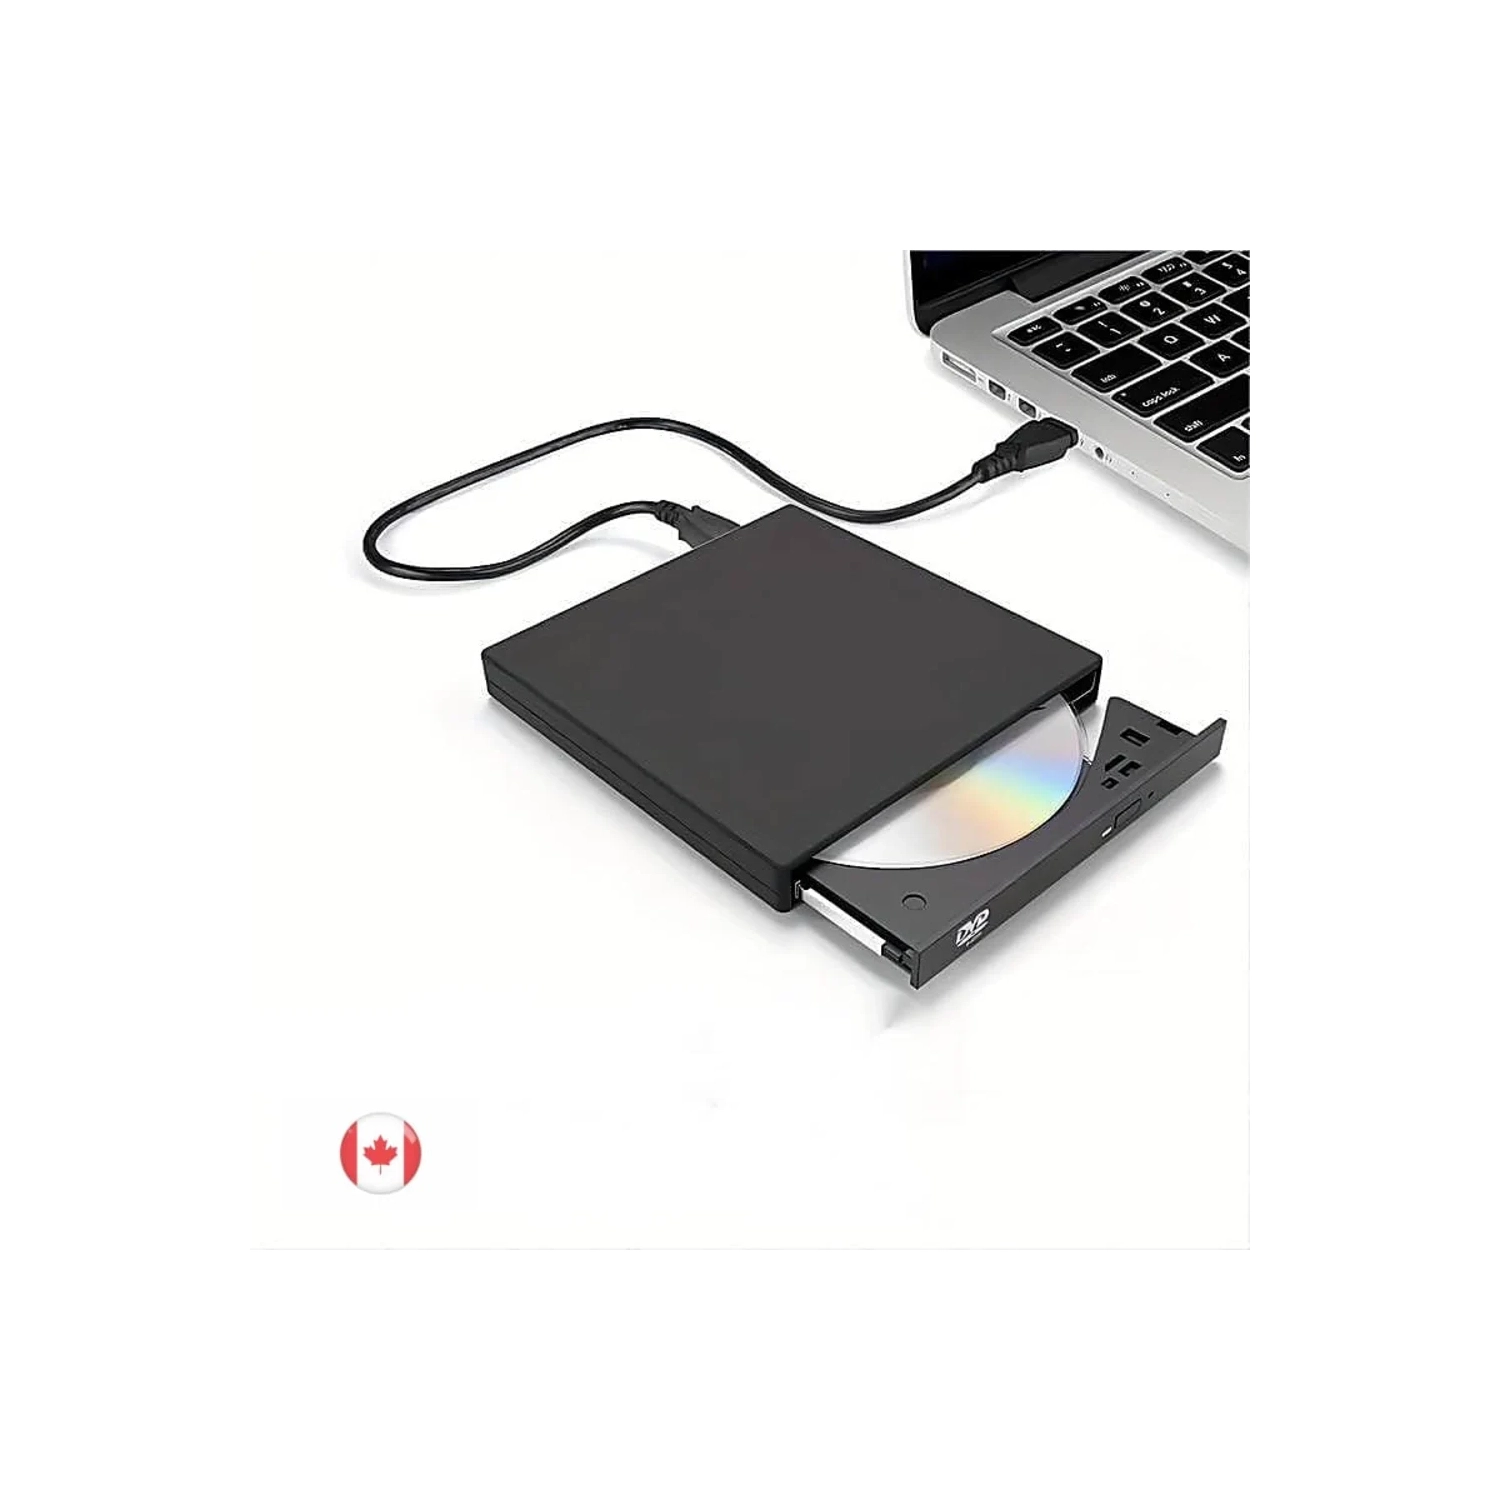 USB 2.0 Slim External CD DVD Drive: Portable CD-RW & DVD-RW Burner for Laptop, Notebook, PC, Desktop Computer - Writer & Player Data Transfer